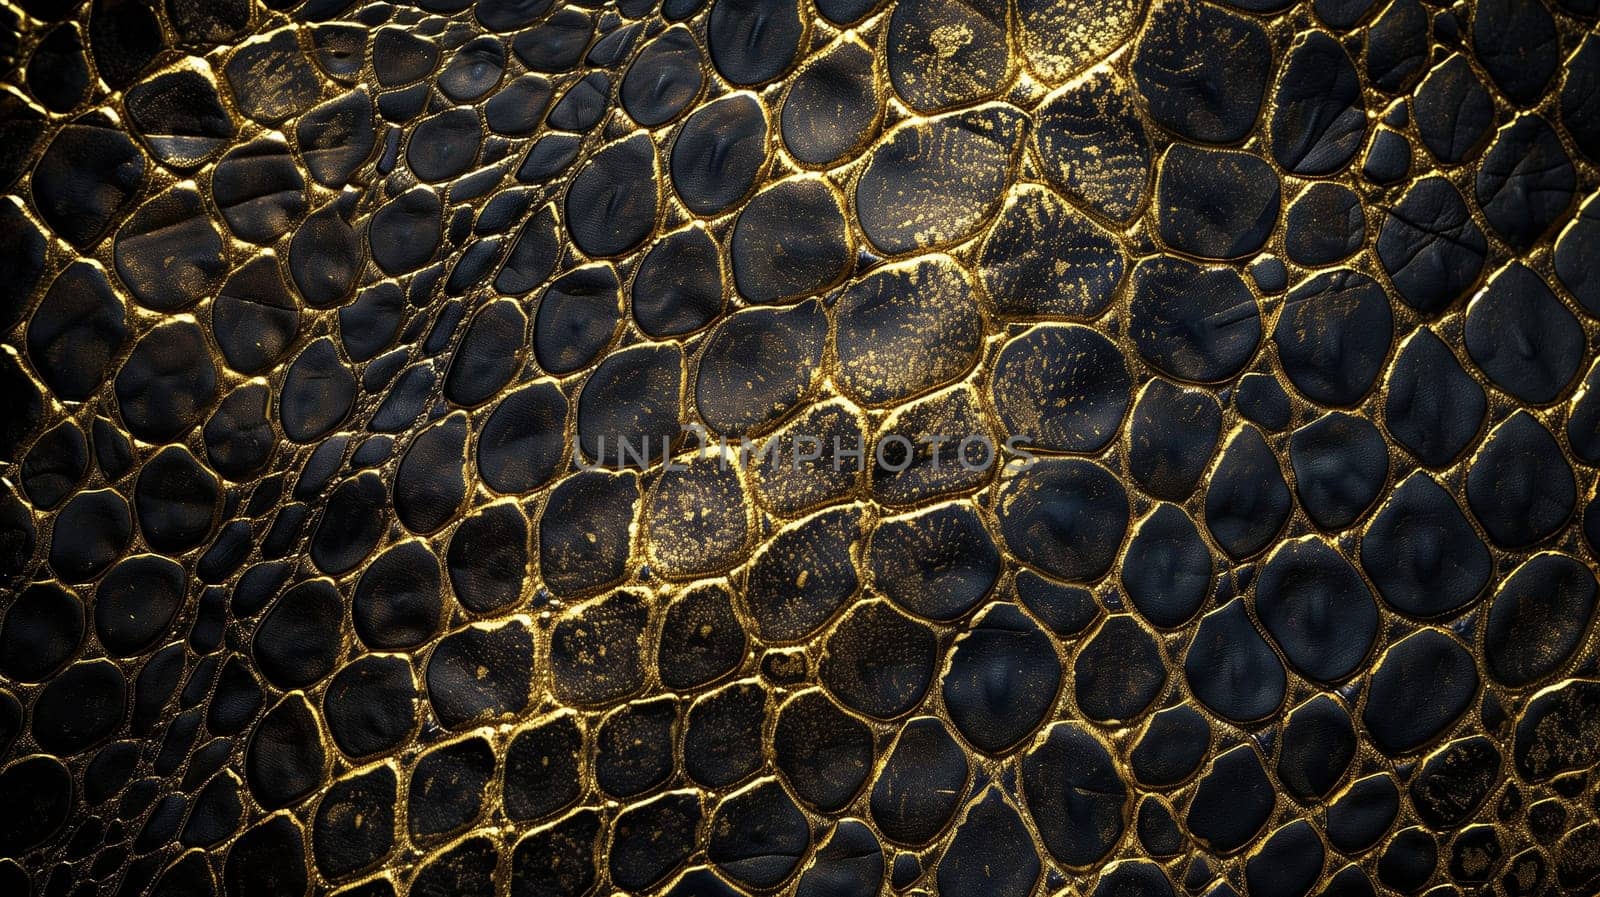 Snake skin background. High quality photo